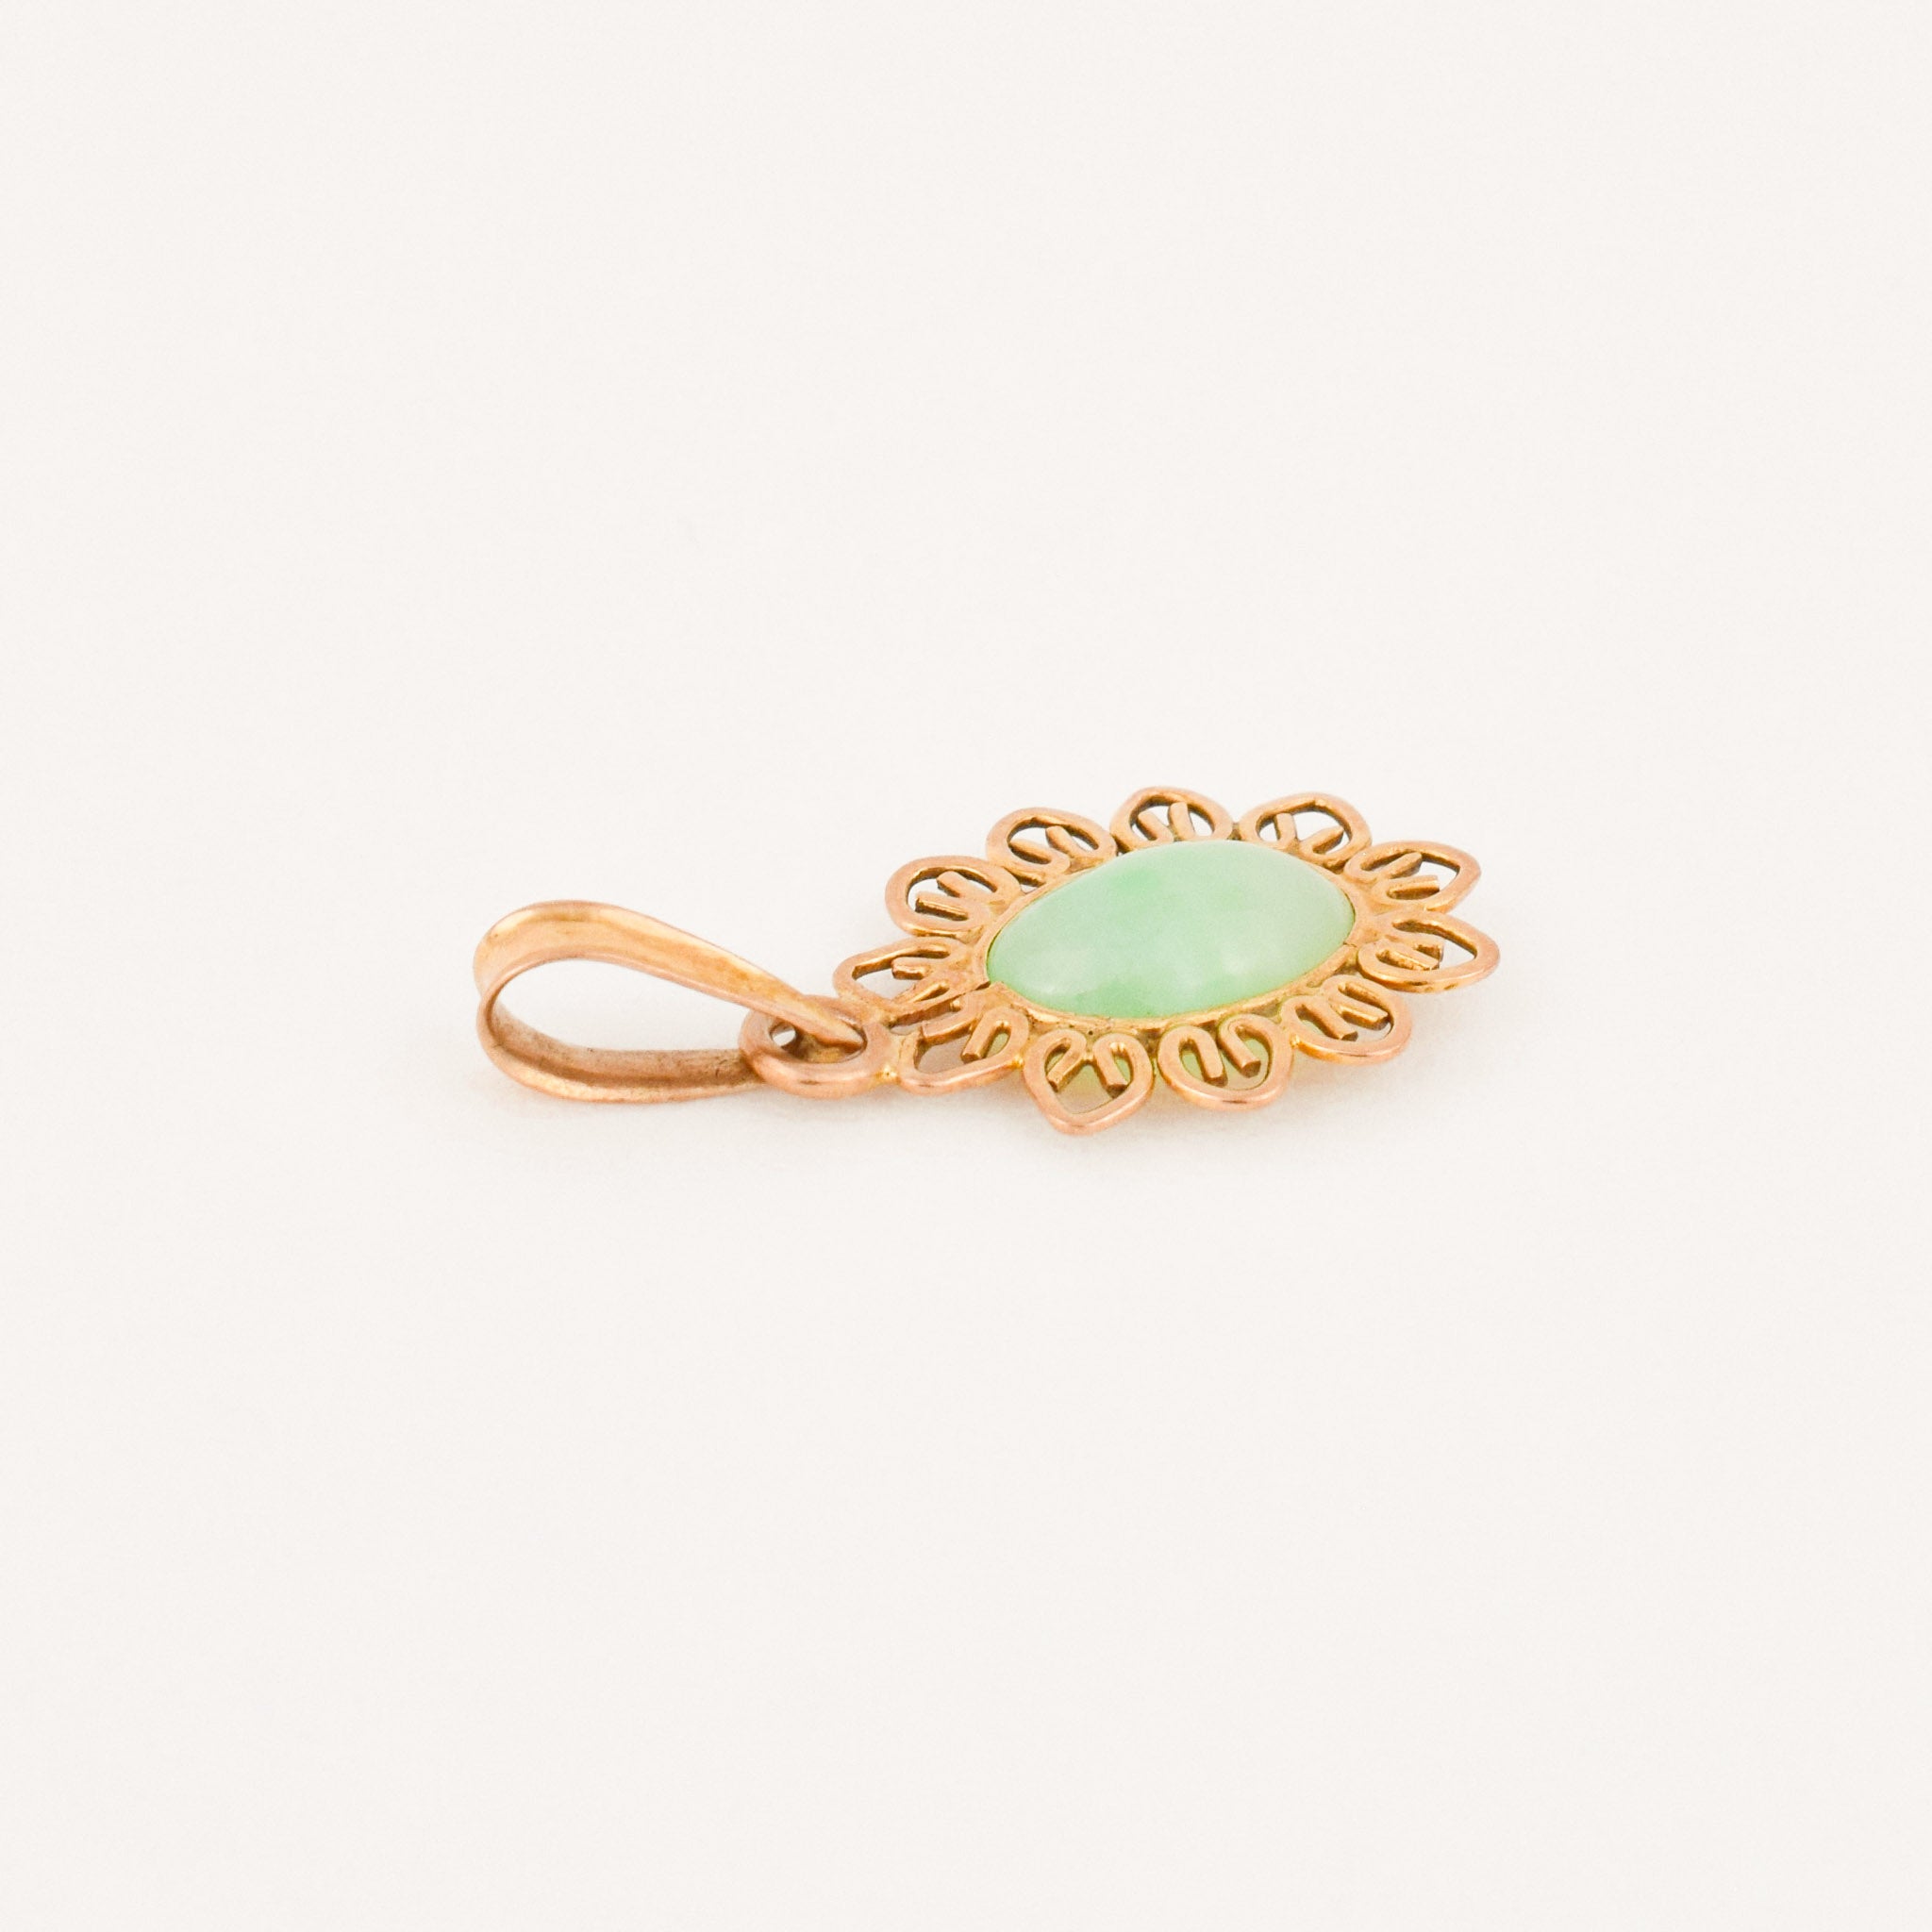 vintage gold jade flower charm pendant 